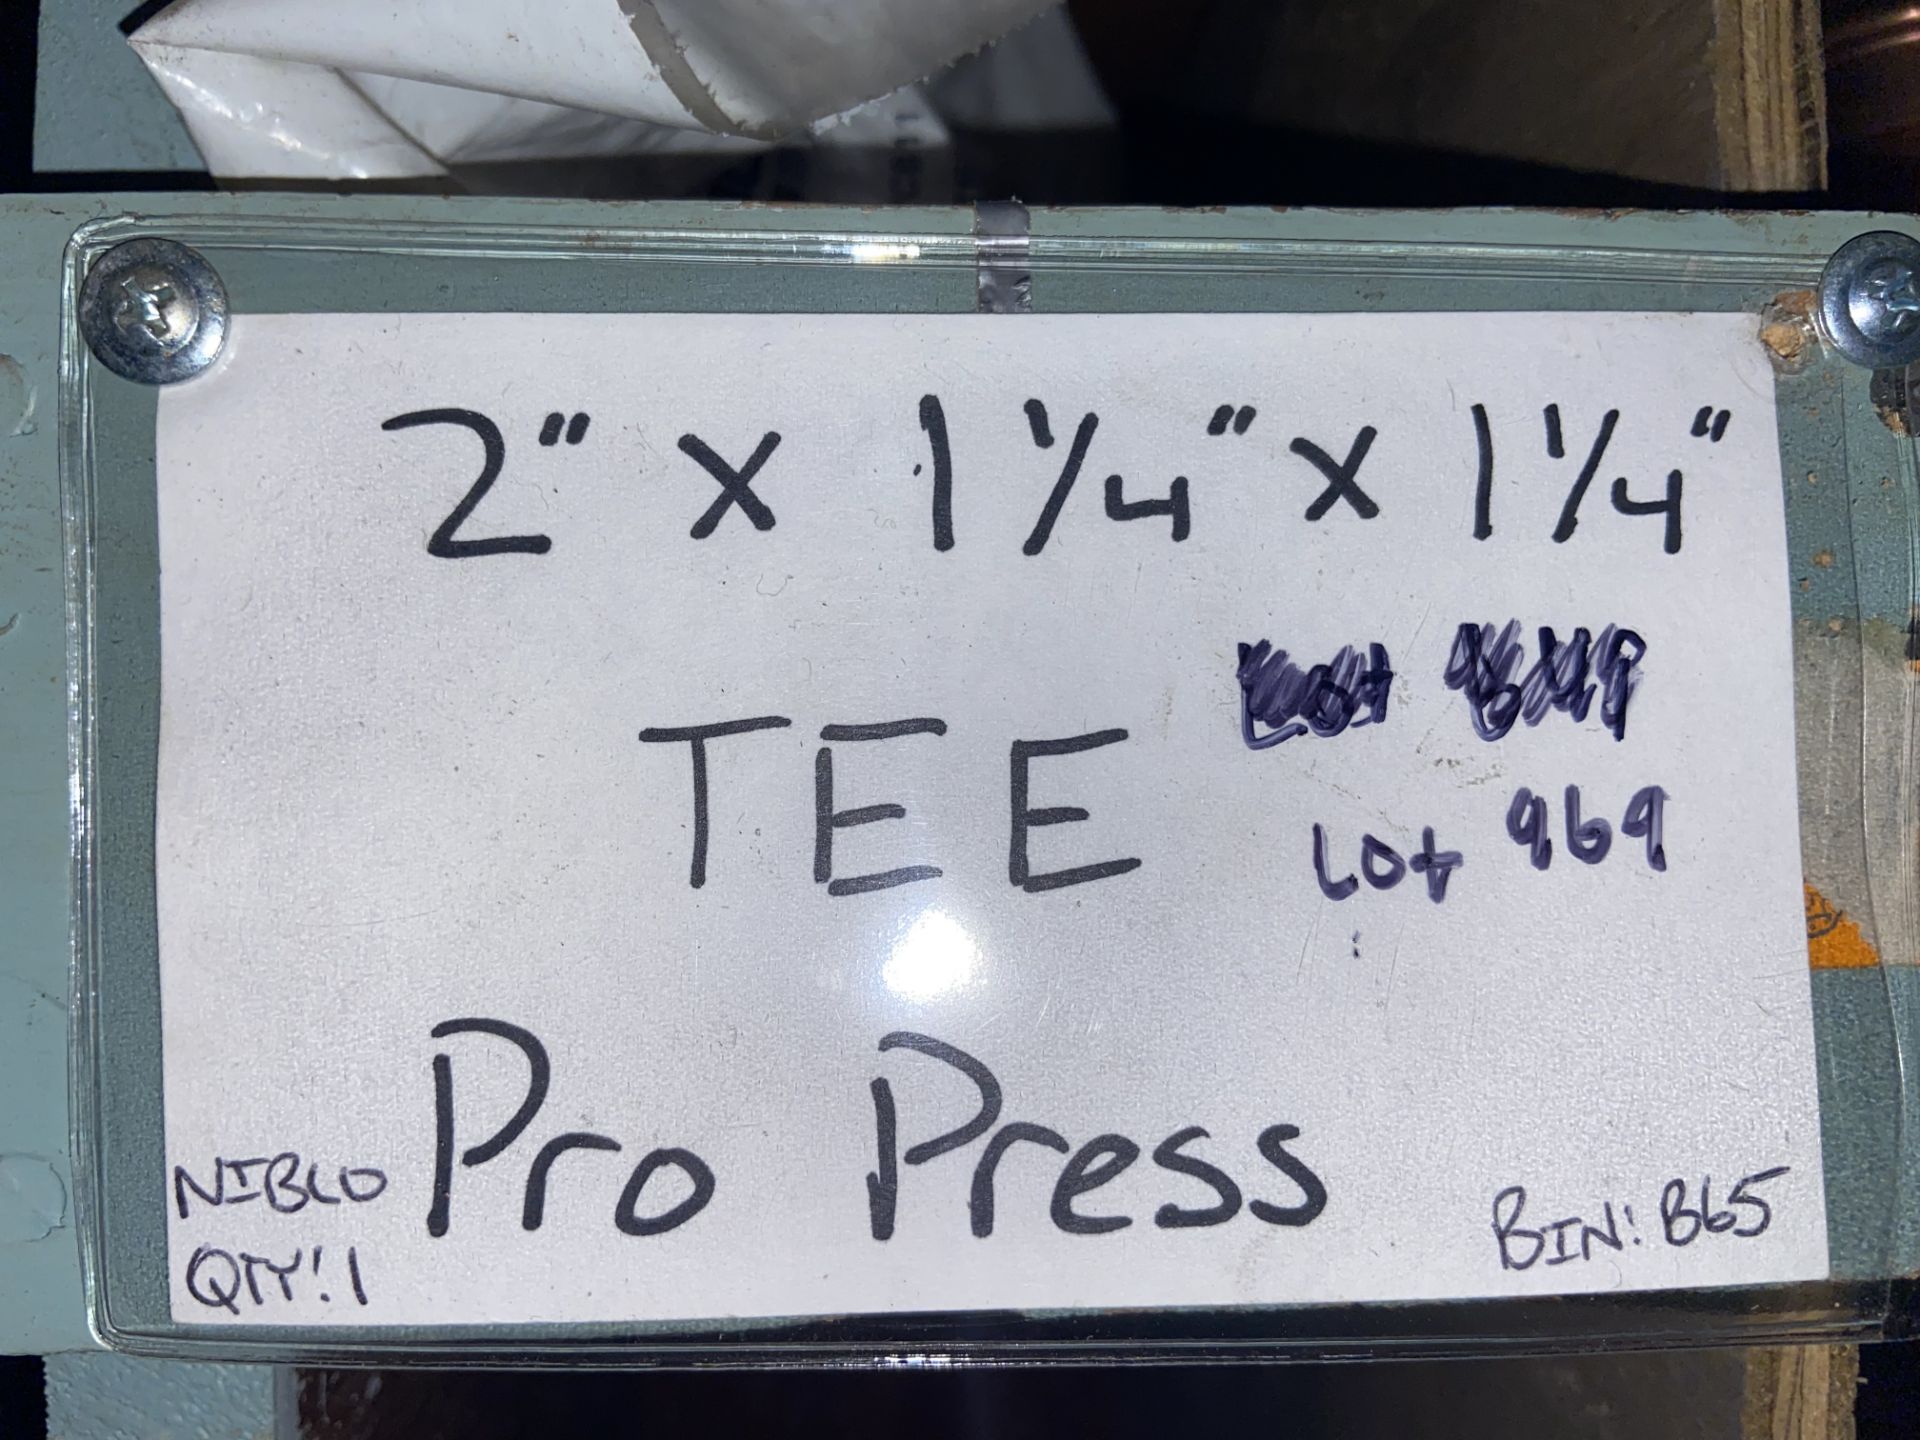 (1) VIEGA 2”x1 1/2” x 1 1/4” Tee Pro Press; (2) NIBCO 1 1/4” 1 1/4”x 1/2” Tee Pro Press; VIEGA (1) - Image 10 of 33